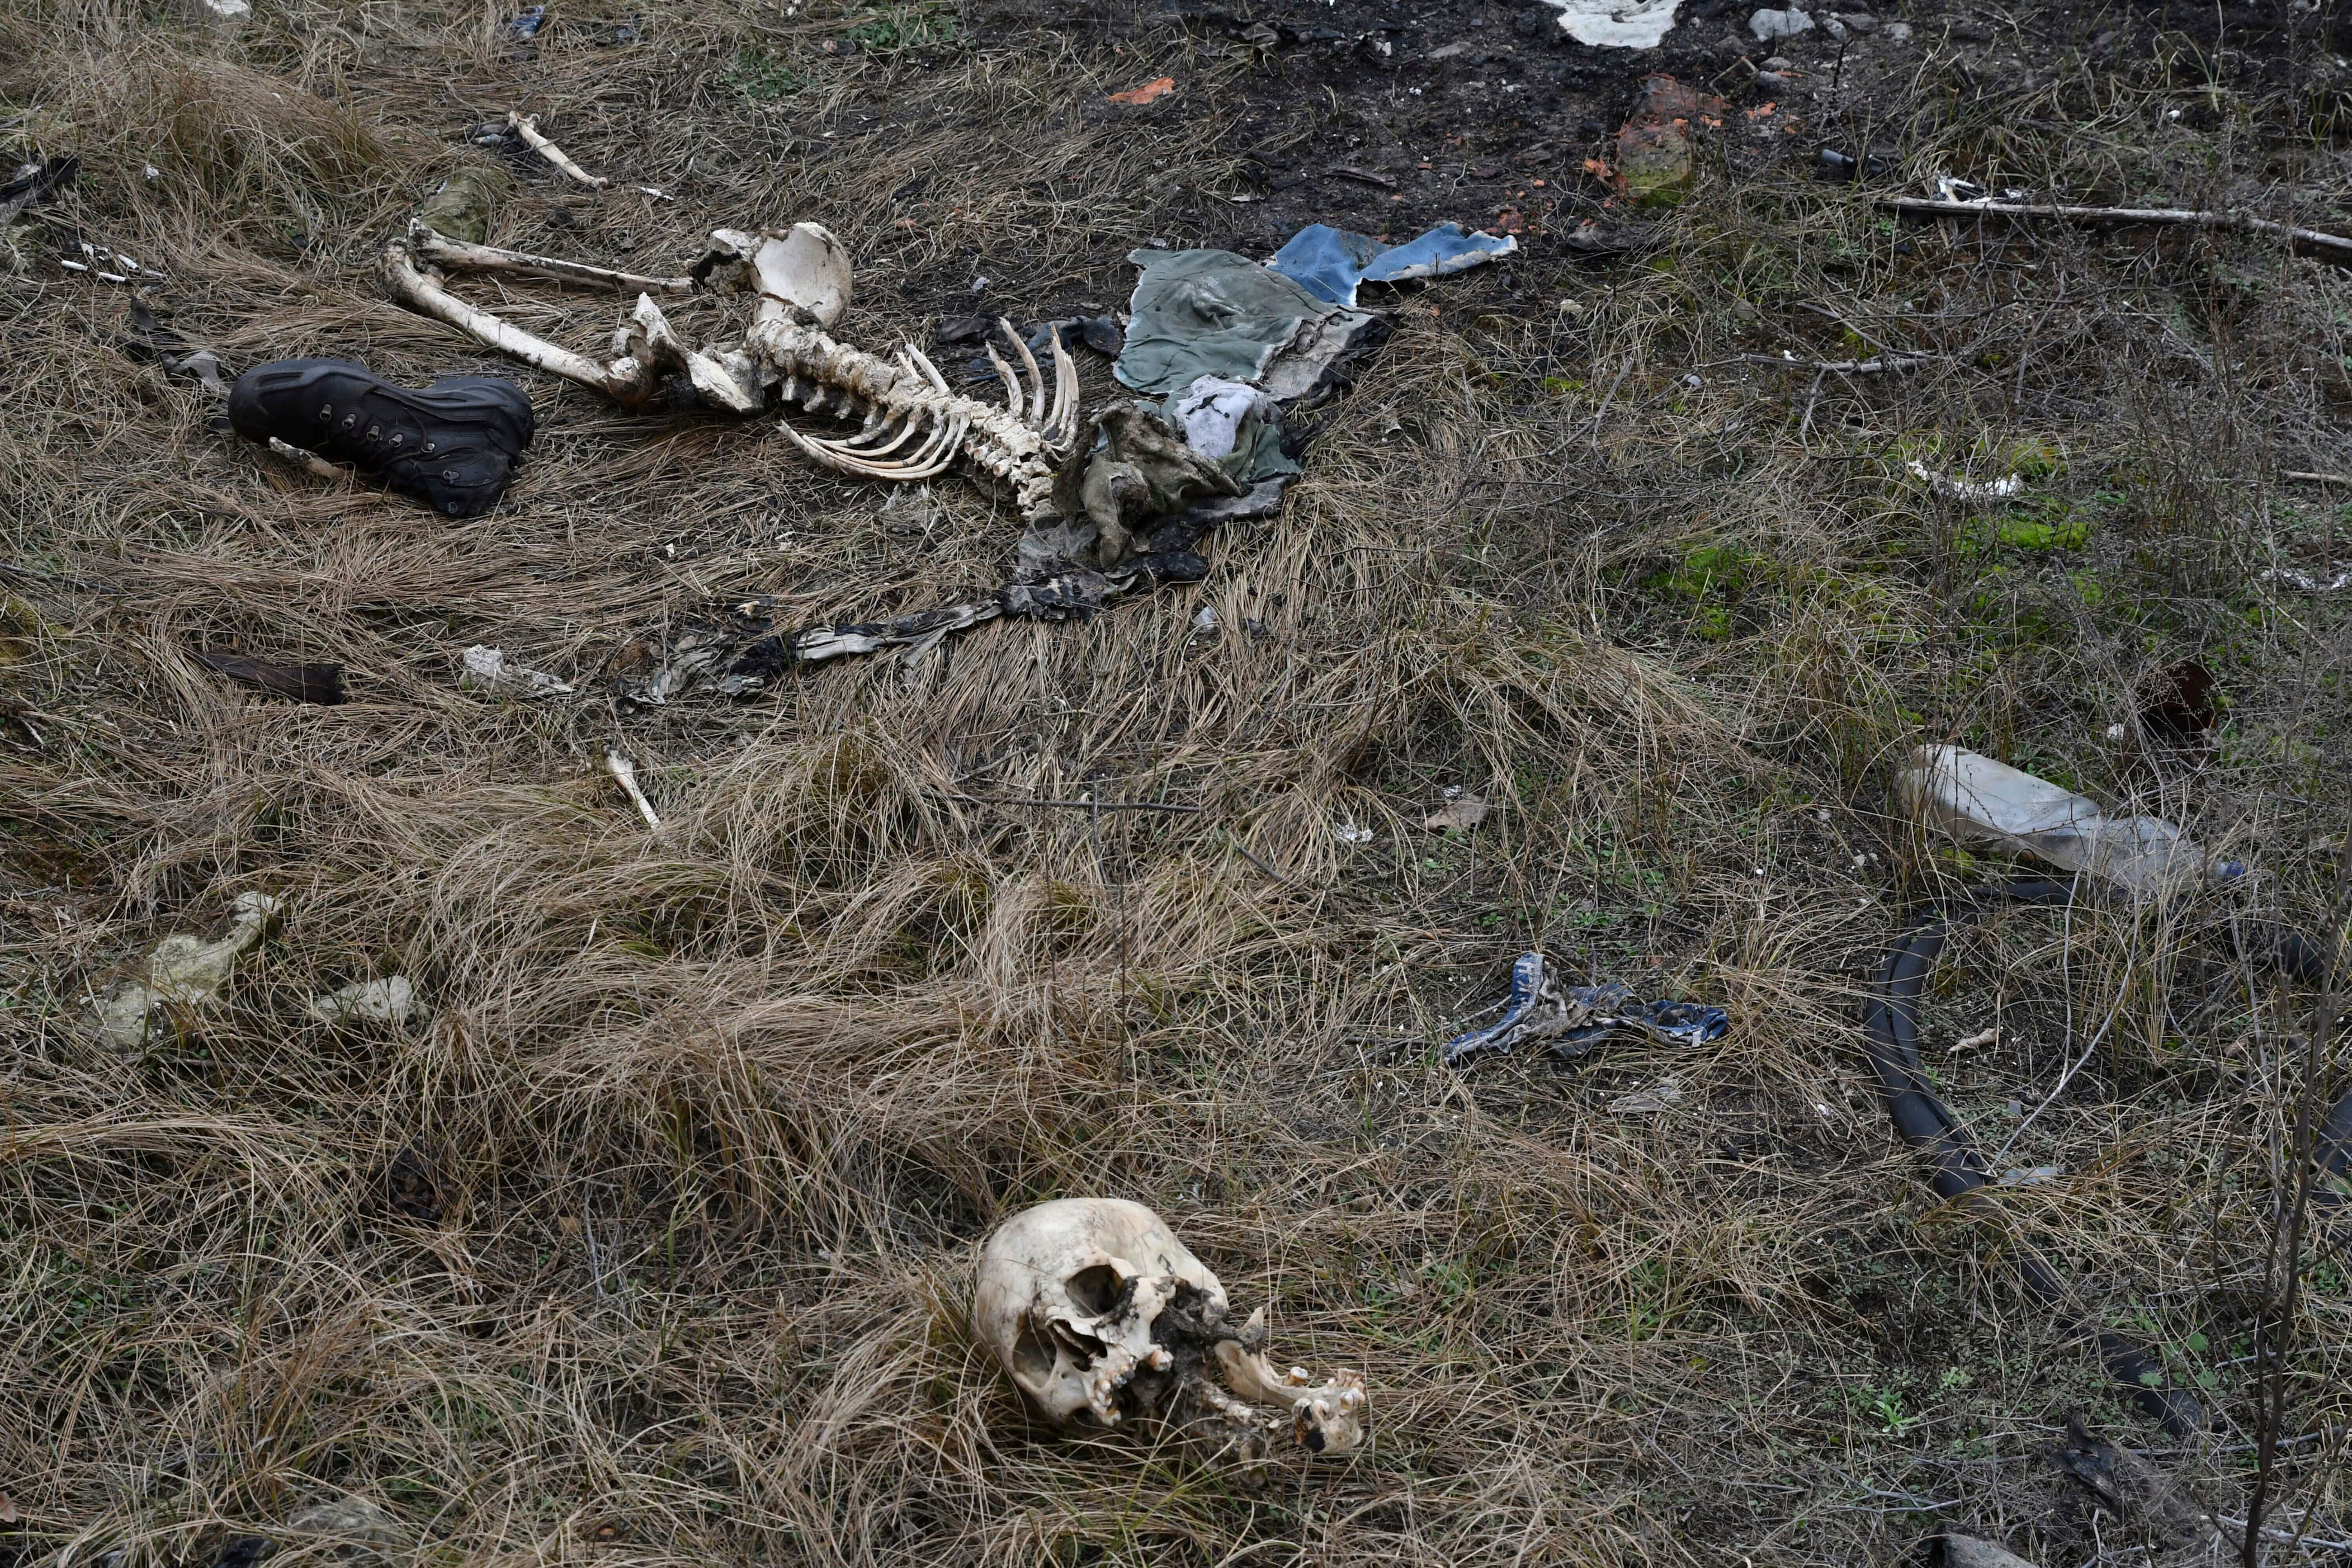 russian soldier murder rate soars 900% on return from ukraine war